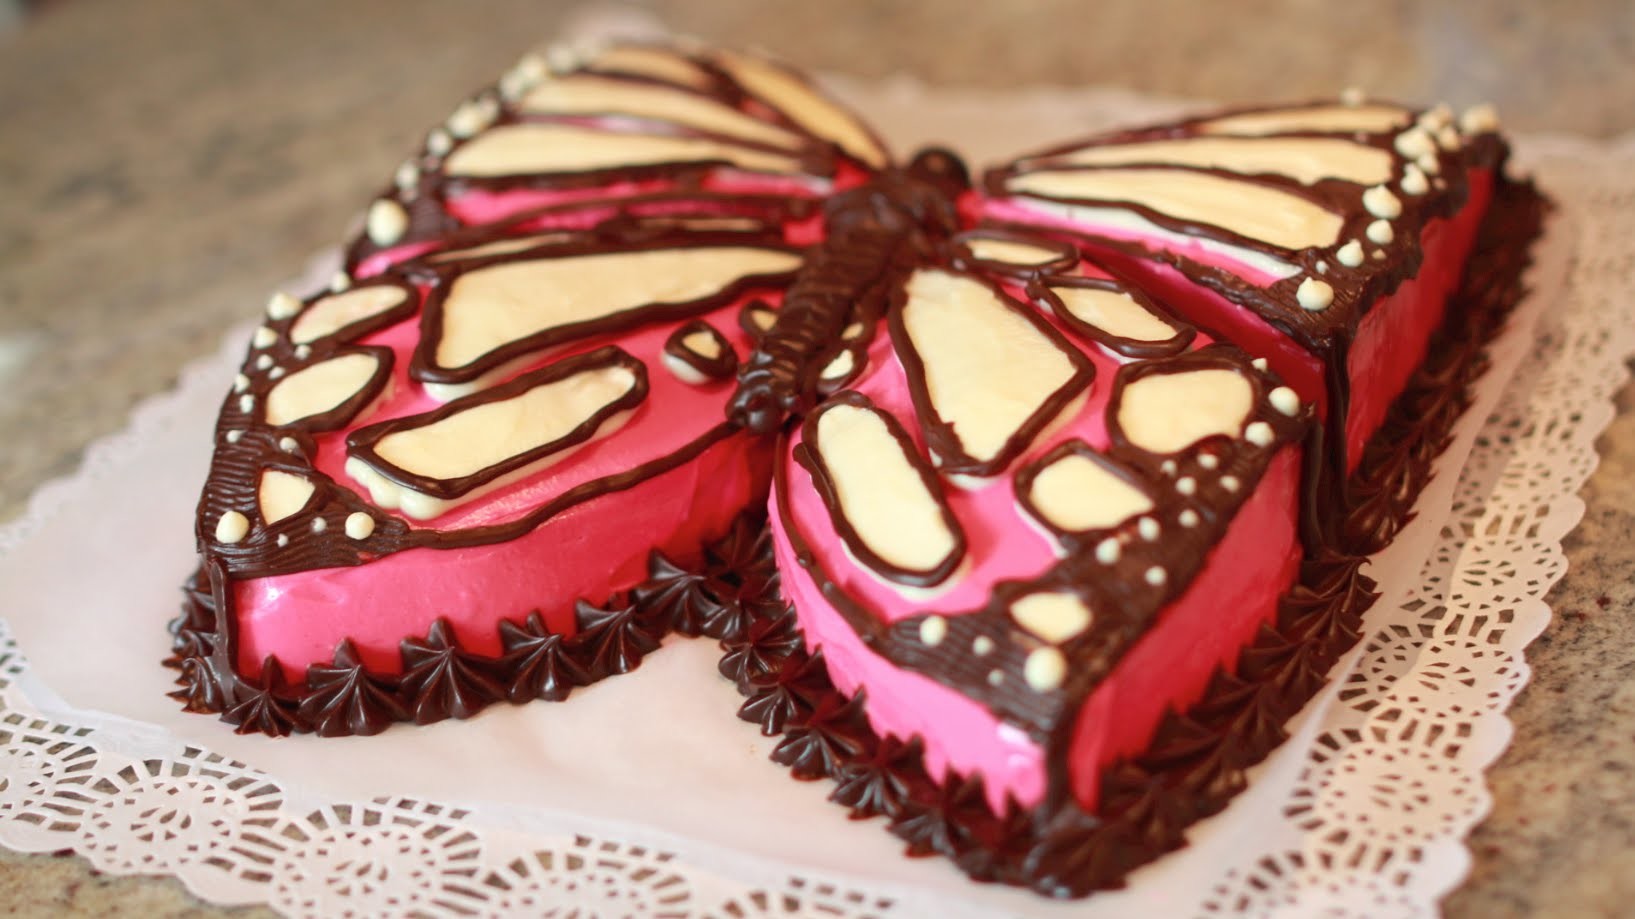 Tarta Mariposa de Cumpleaños - Butterfly birthday cake